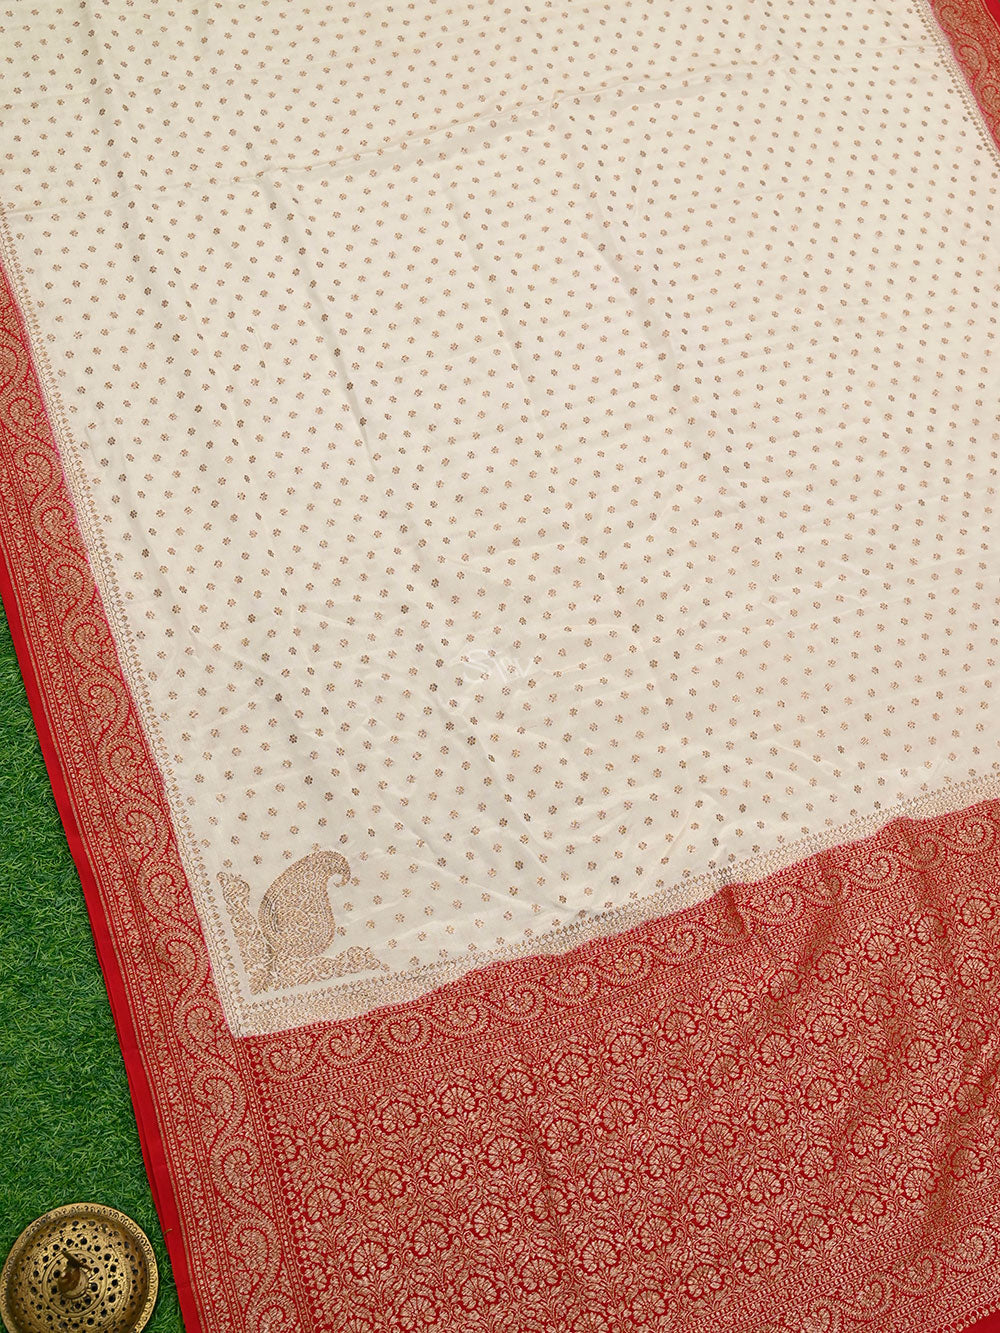 Off-White Konia Crepe Silk Booti Handloom Banarasi Saree - Sacred Weaves